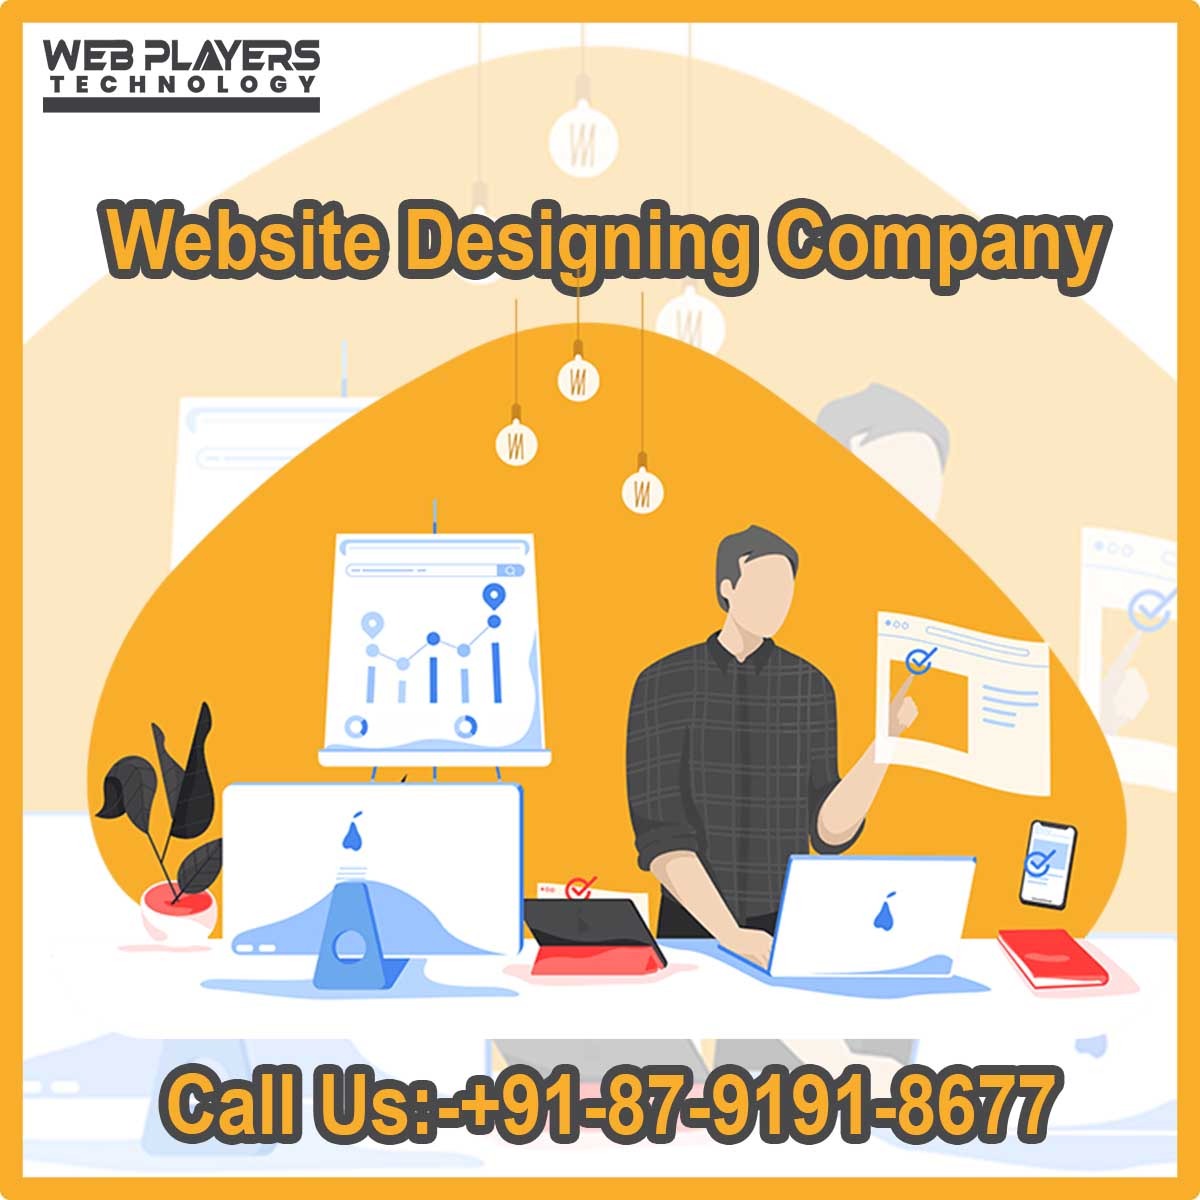 Choosing the Best Web Designing Company-Web Players Technology 